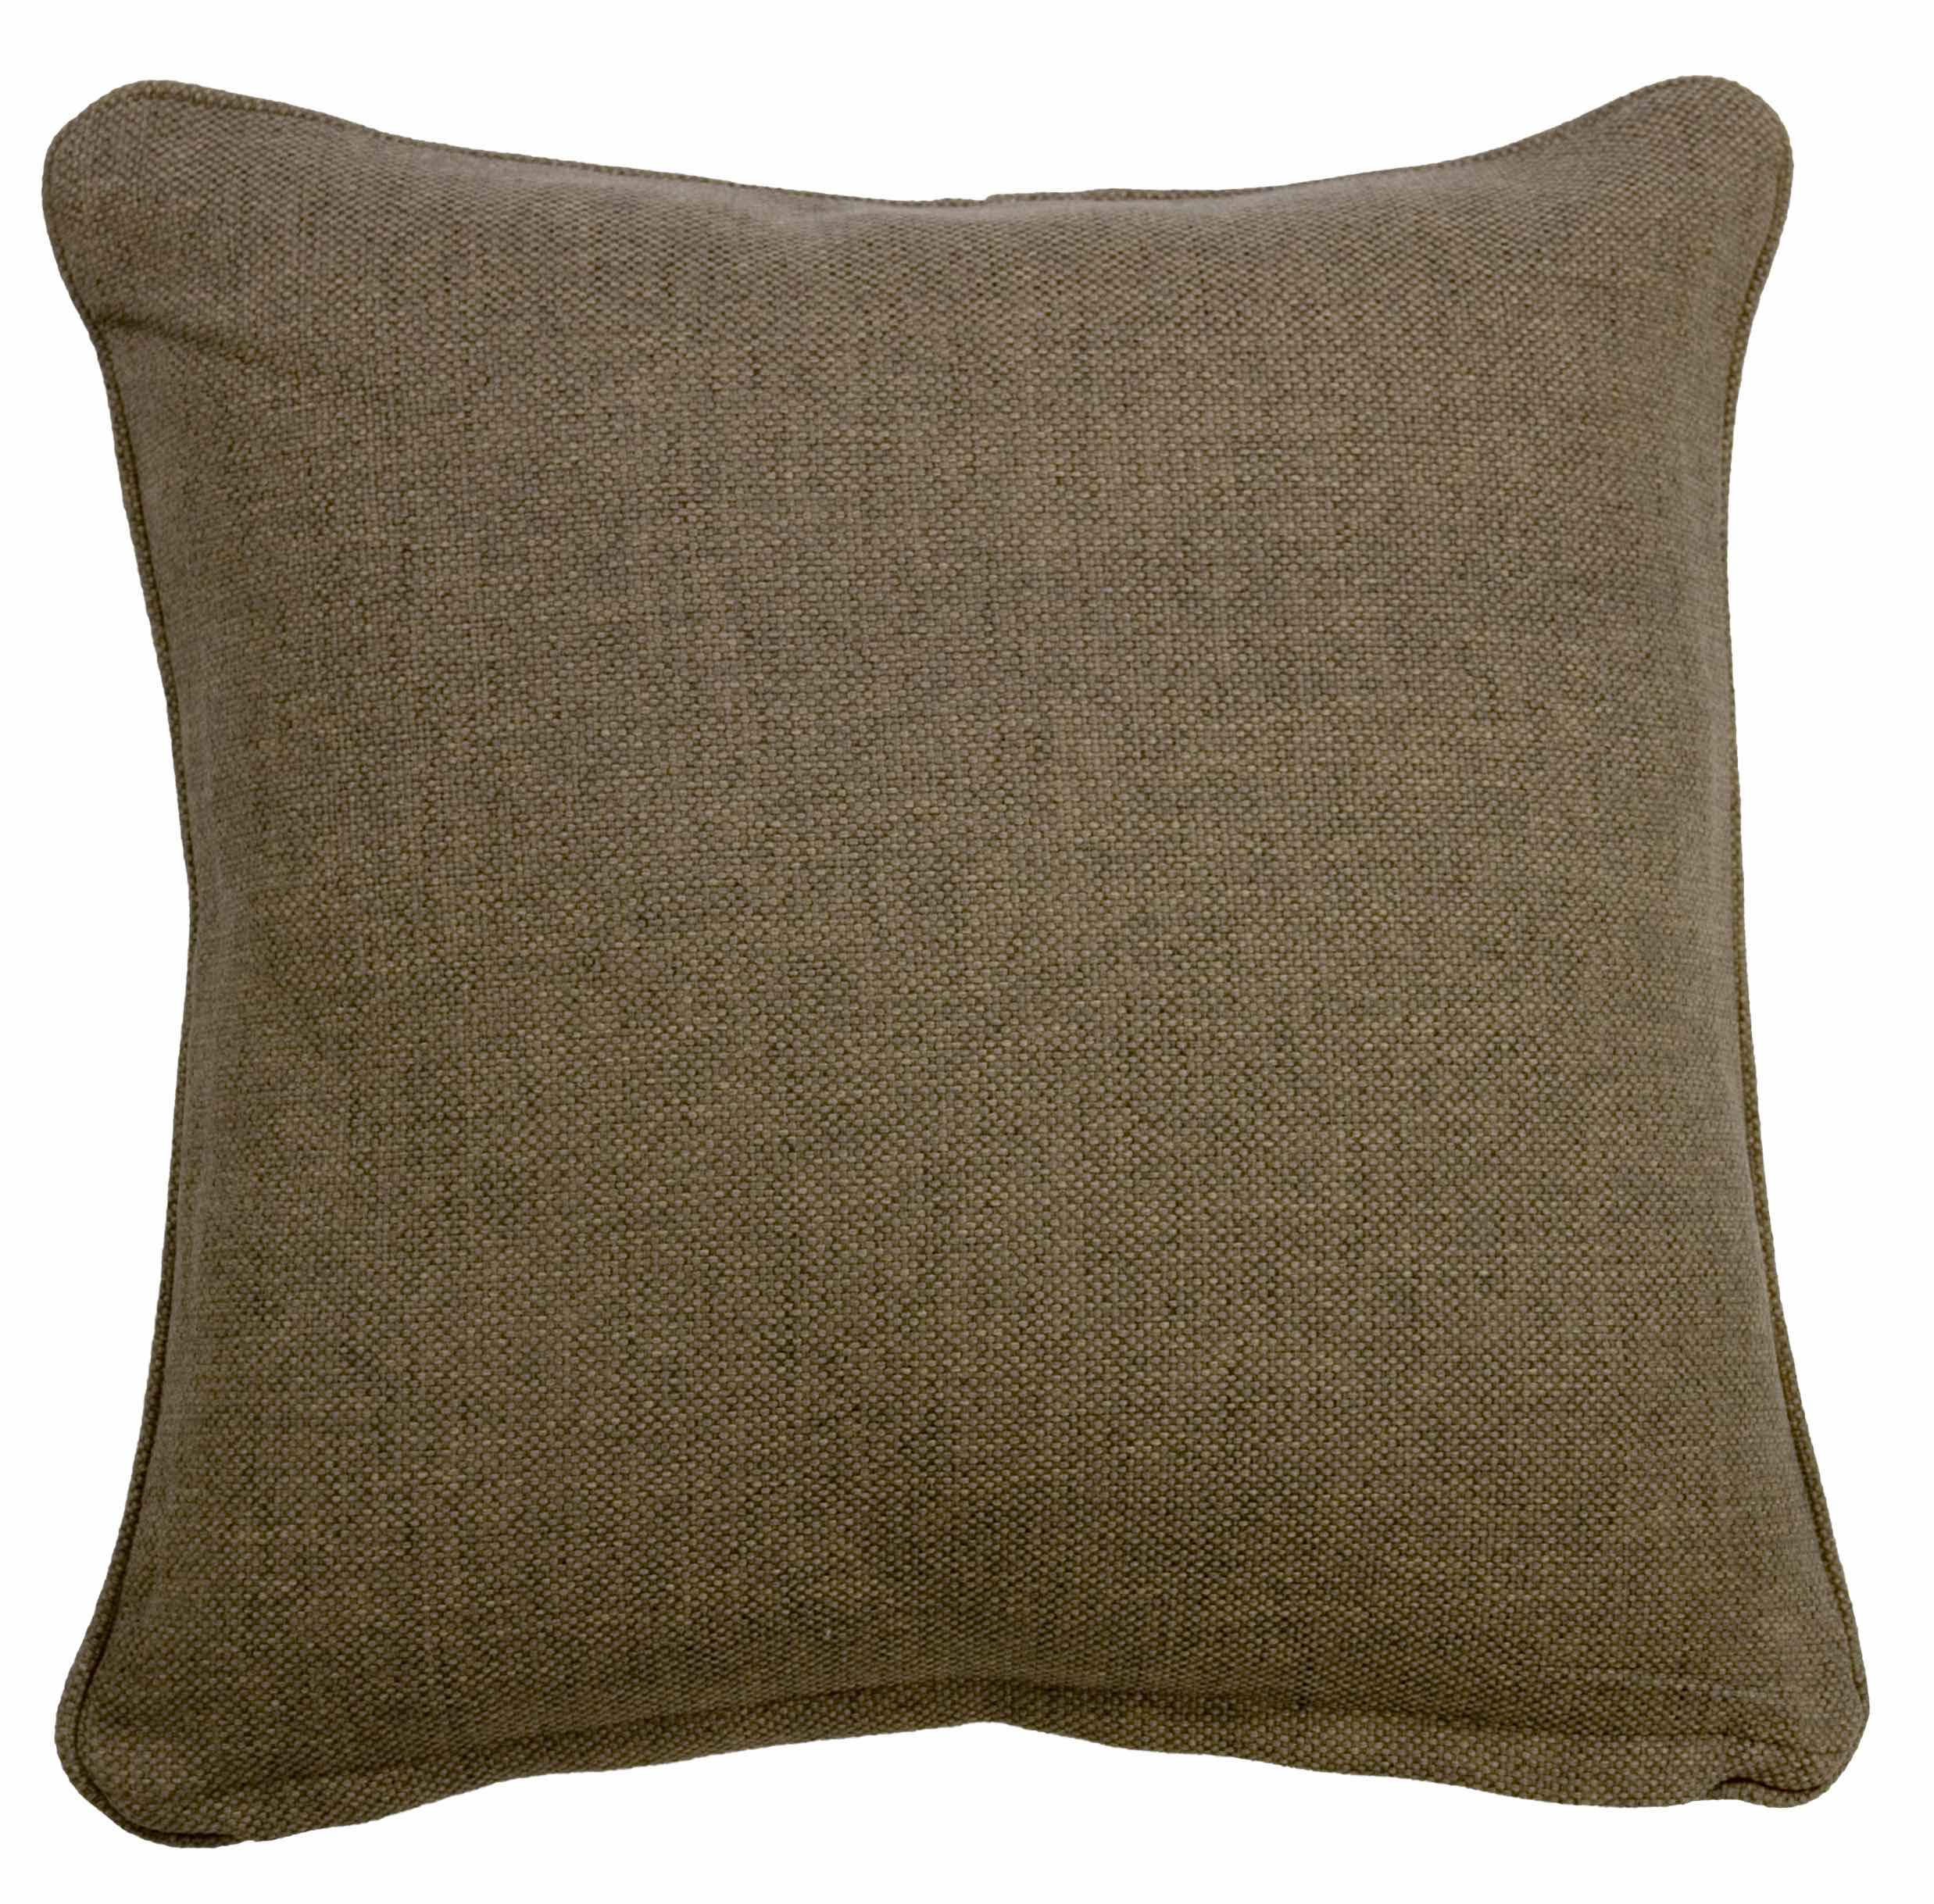 Copacobana Tan - Small Outdoor Cushion - Outdoor Cushions Online